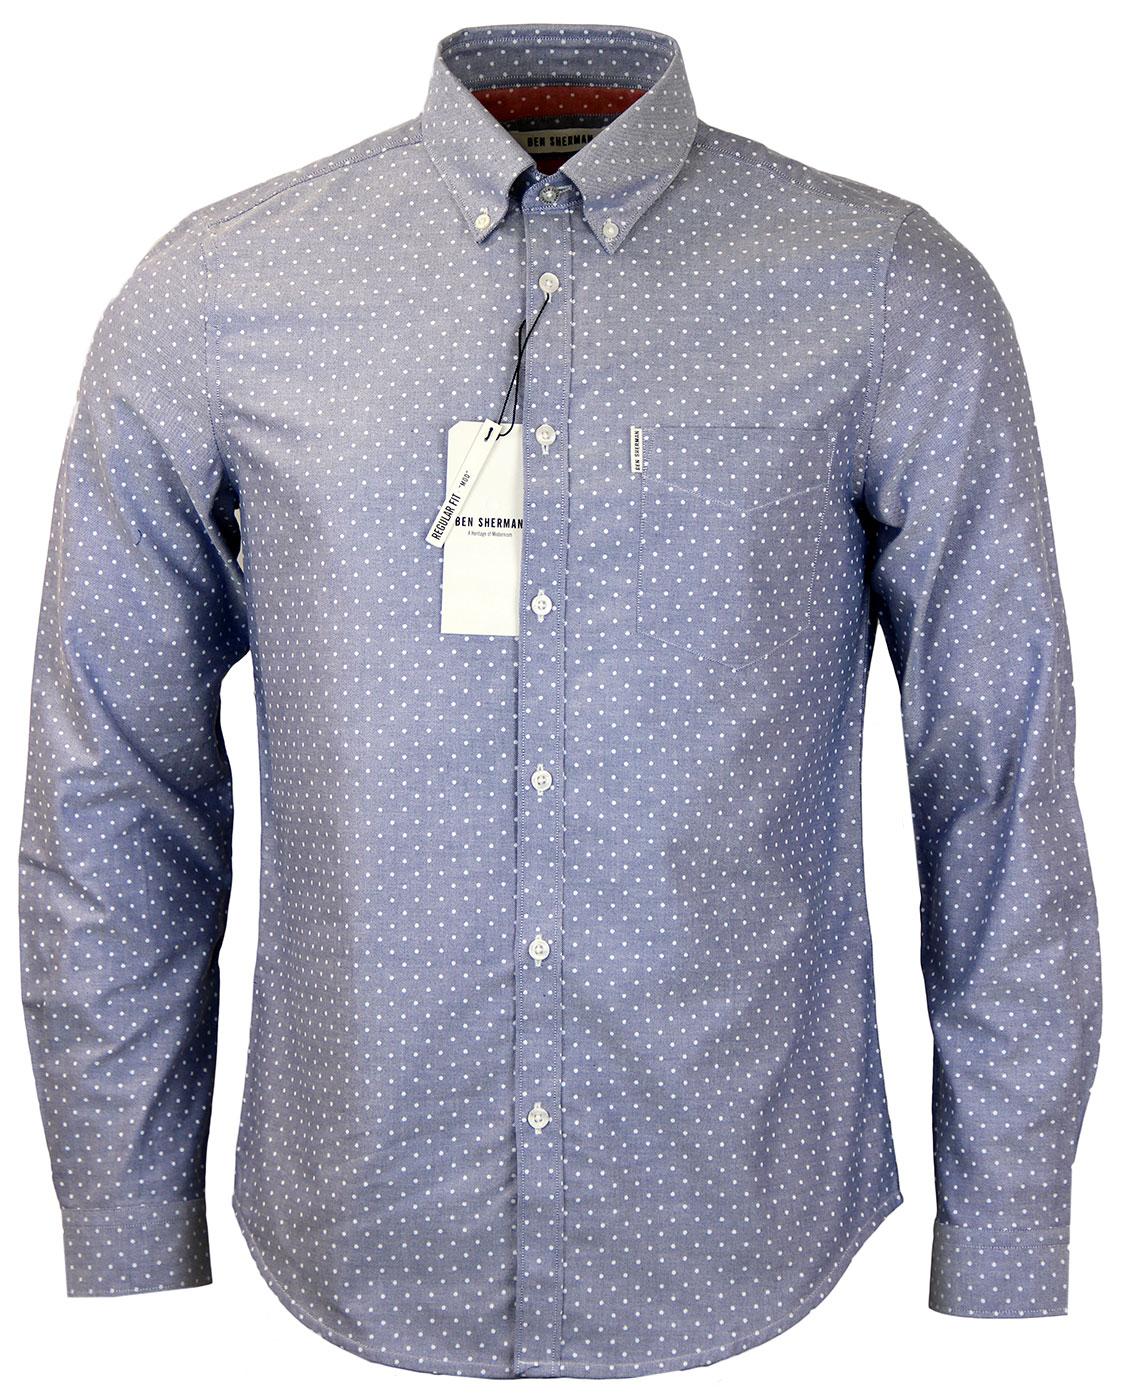 BEN SHERMAN Retro 60s Mod Oxford Polka Dot Shirt in Washed Blue